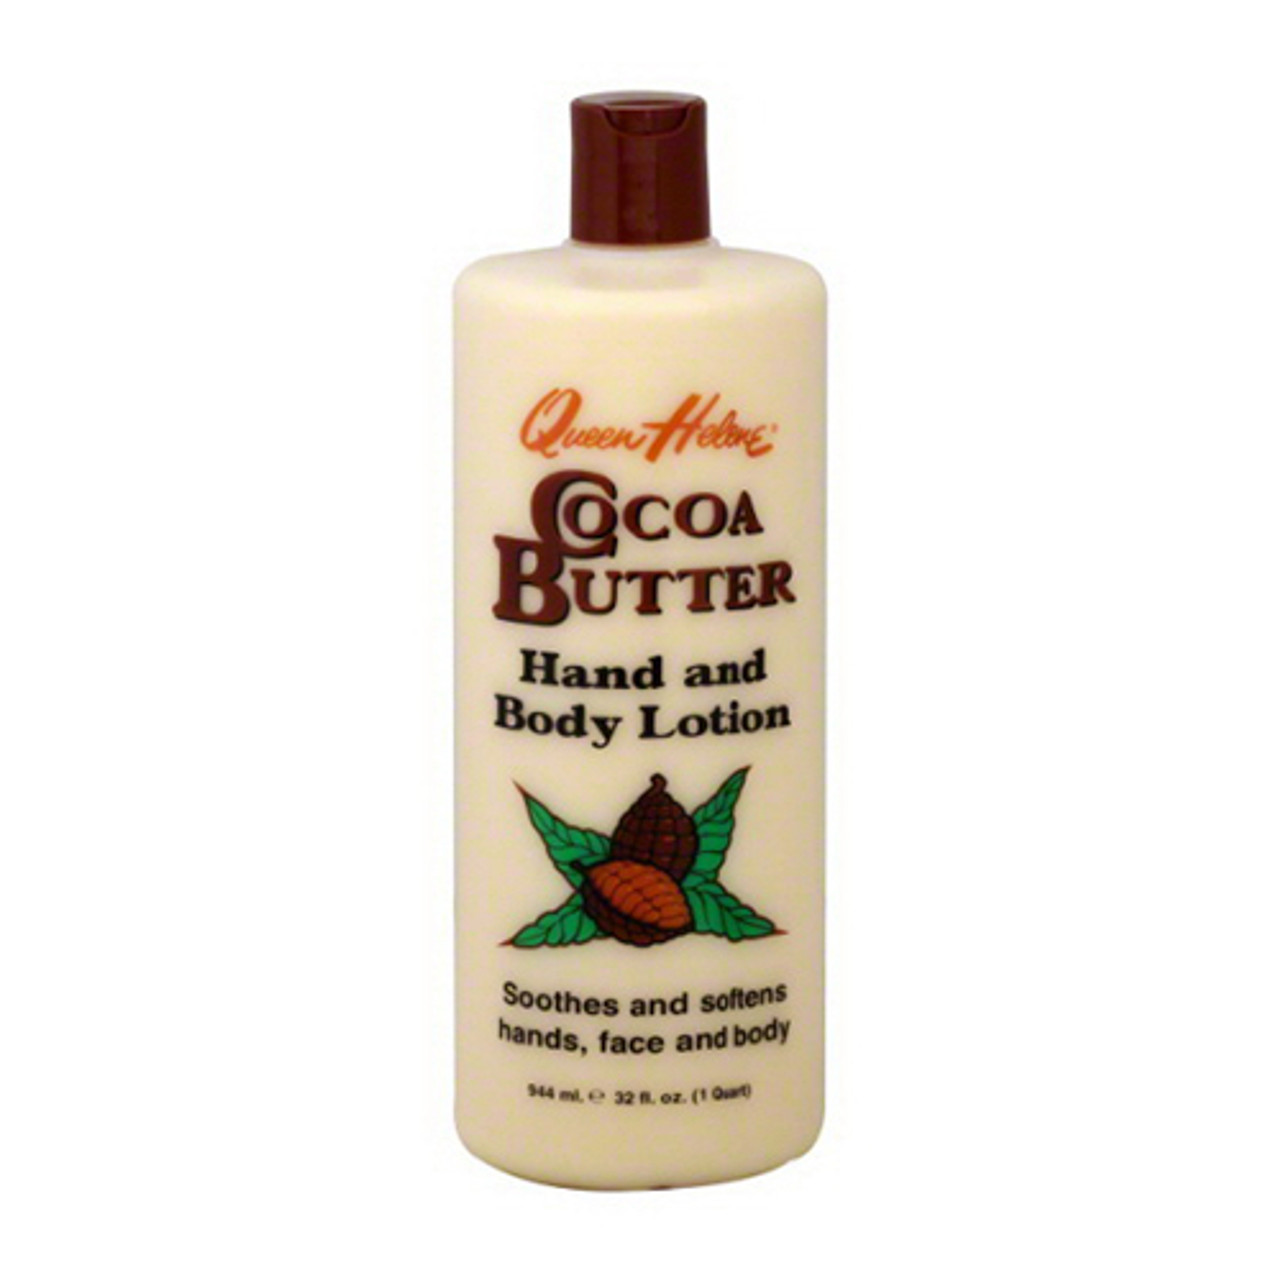 Queen Helene Cocoa Butter Scrub 6oz - Barber Depot - Barber Supply